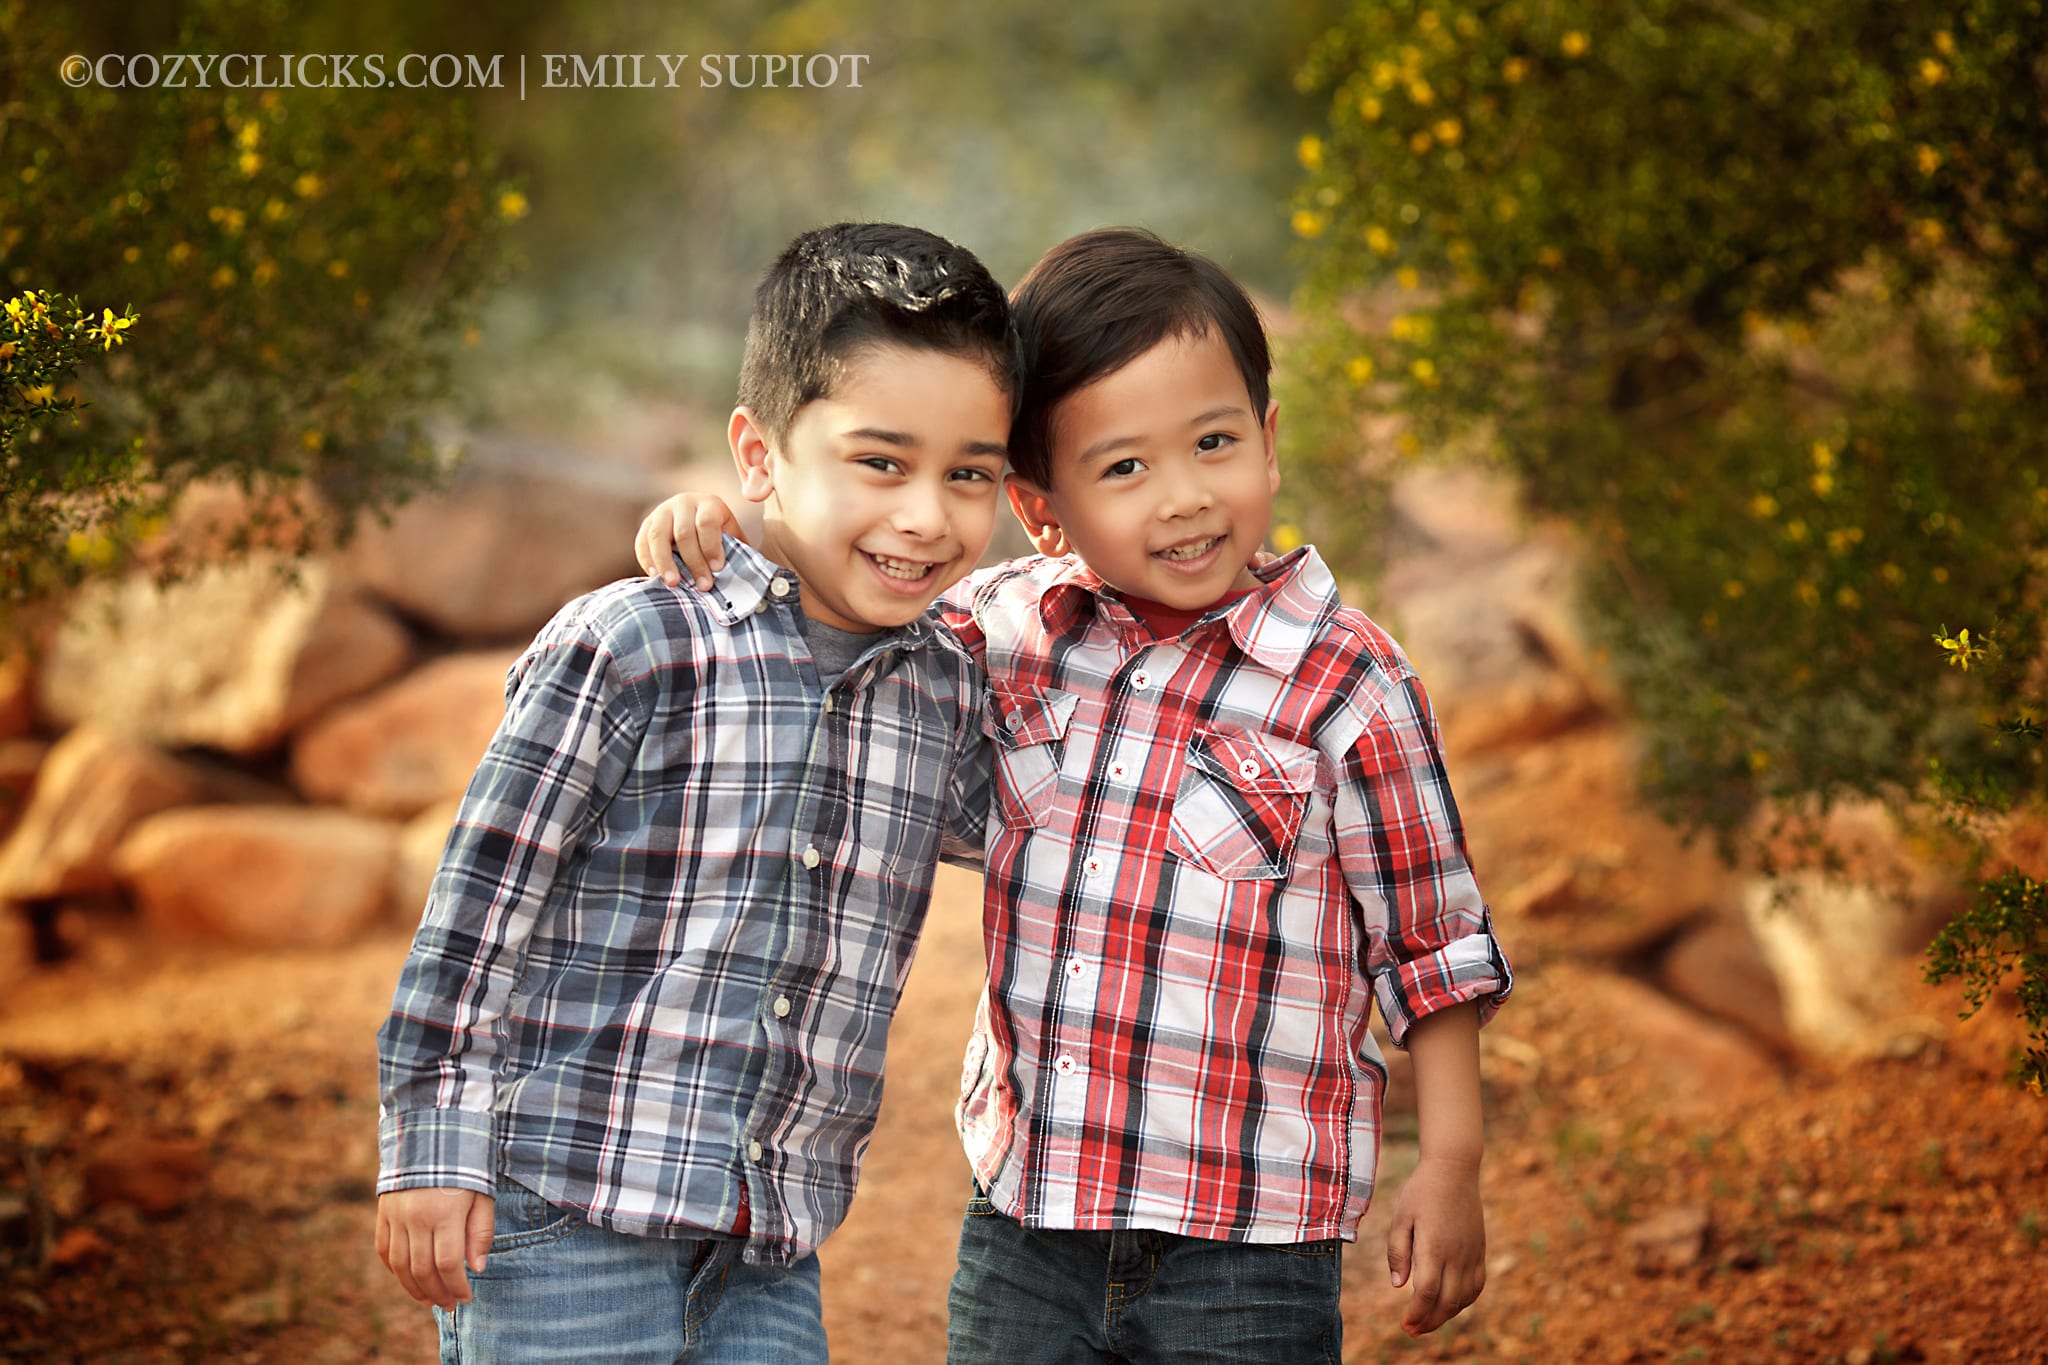 Children's photography near Papago Park in Phoenix Arizona 85044 85048